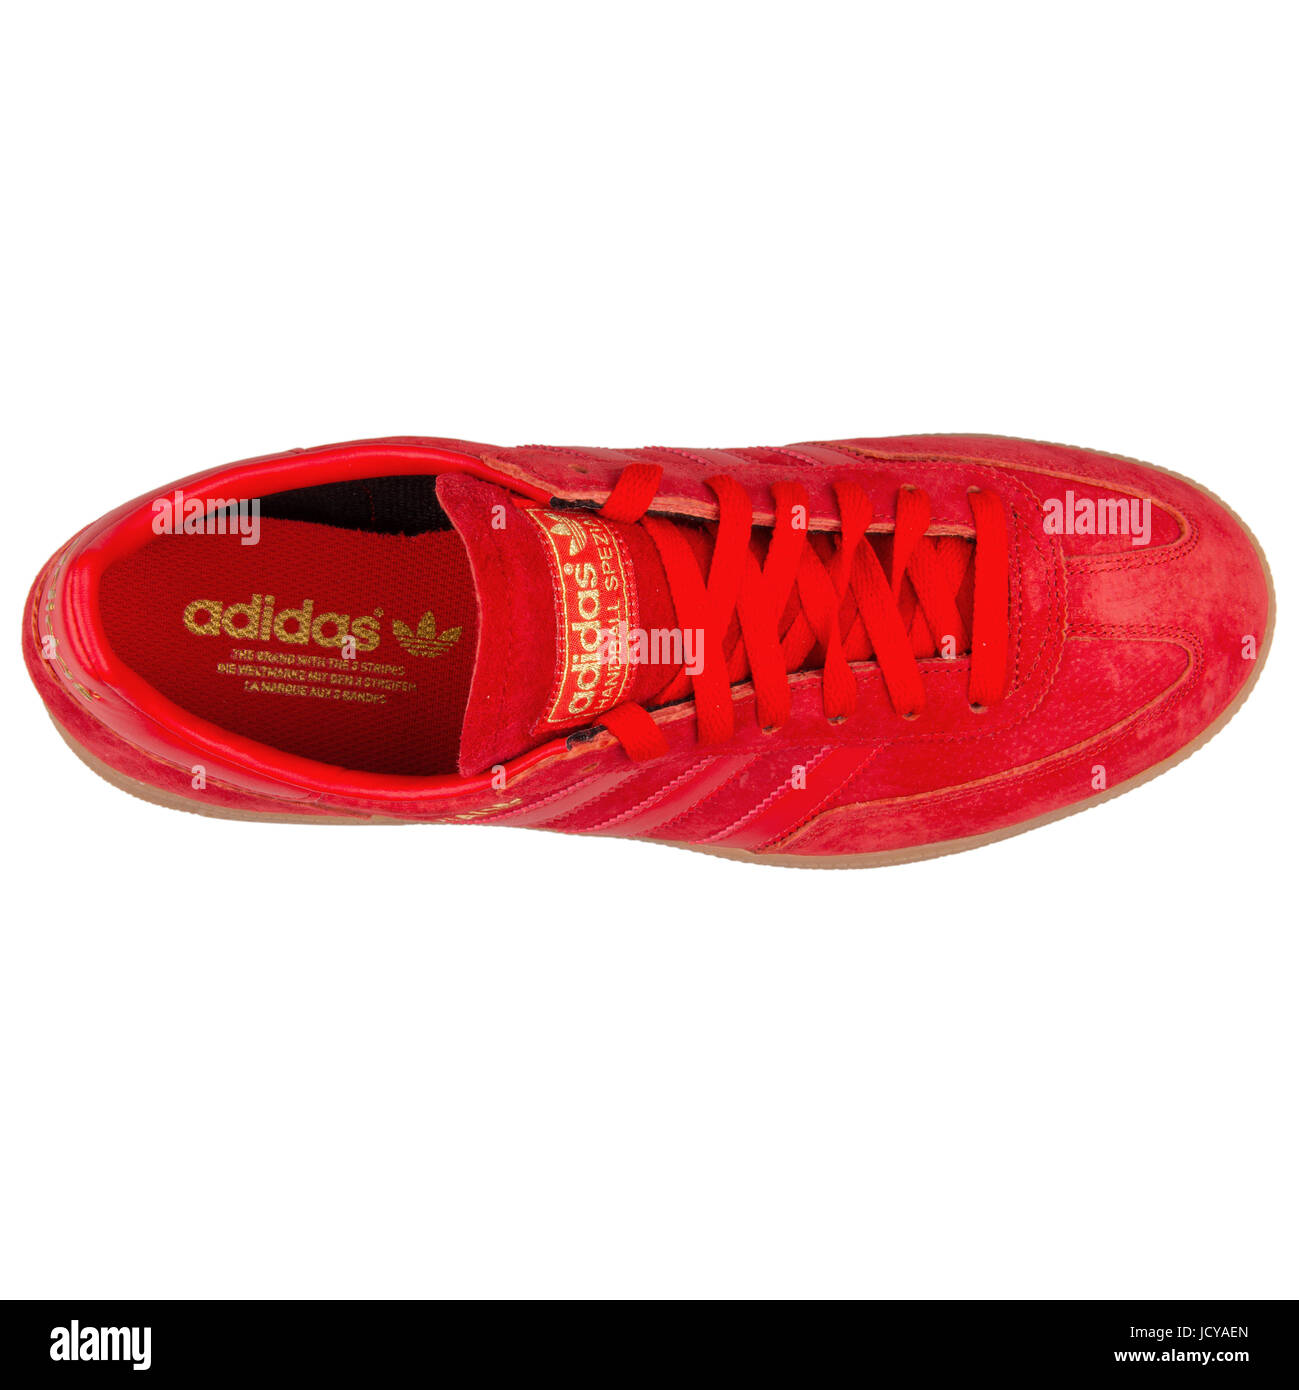 Adidas Spezial Red Men's Sports Shoes - B35209 Stock Photo - Alamy